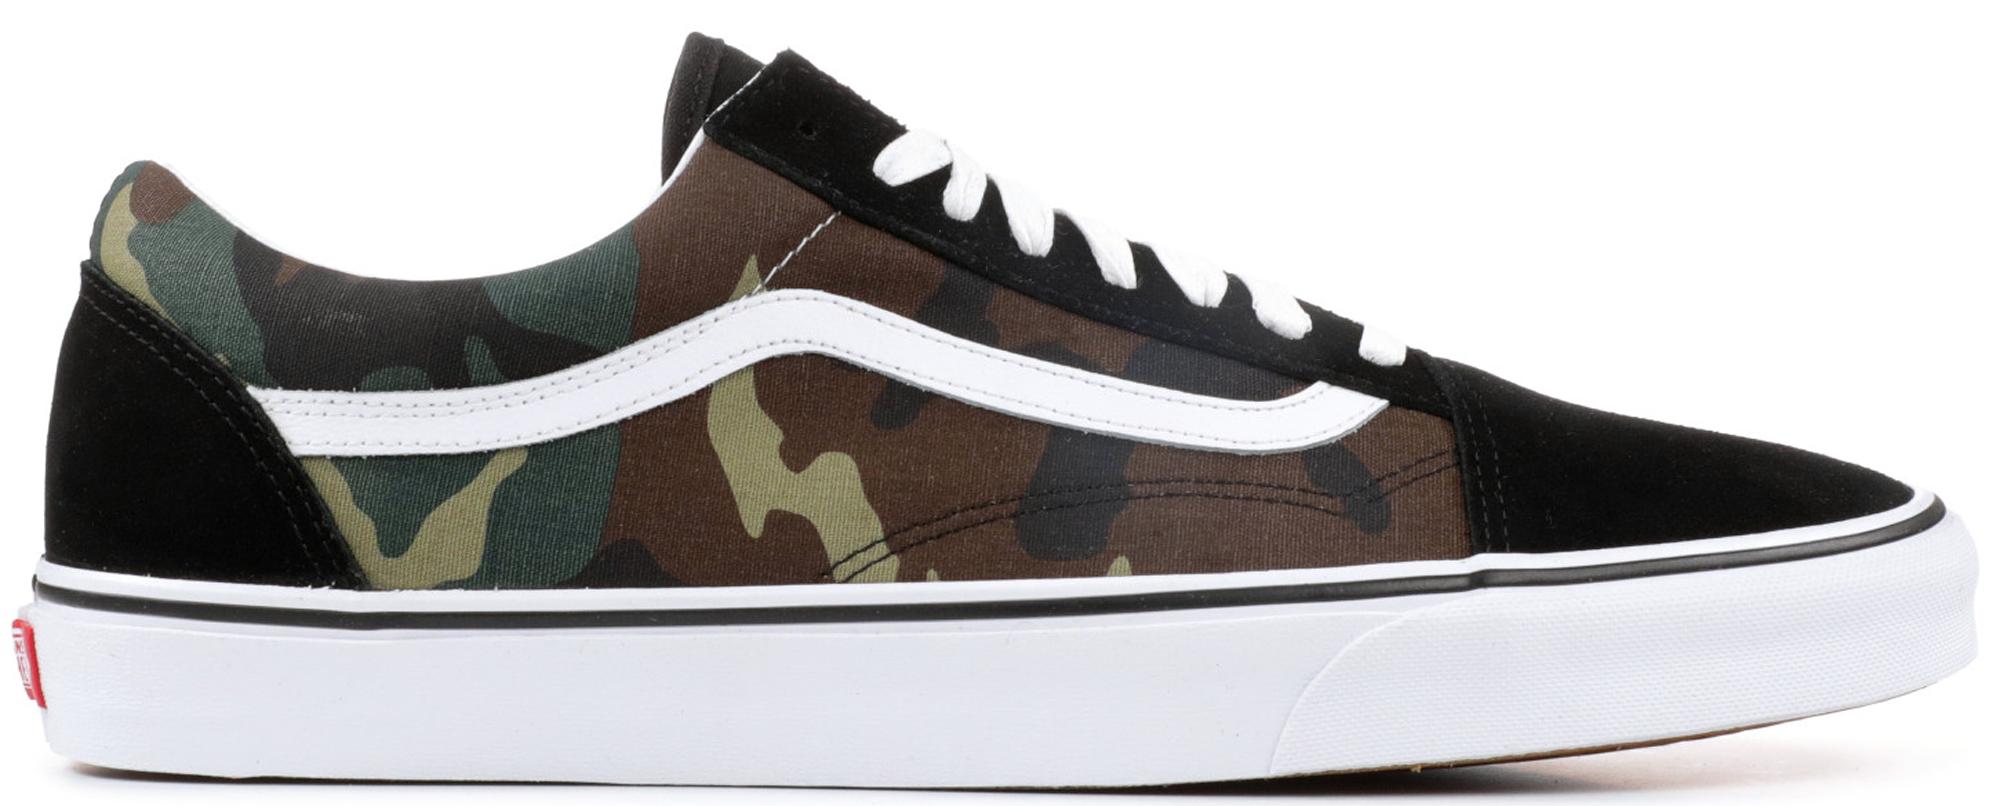 camouflage vans sneakers